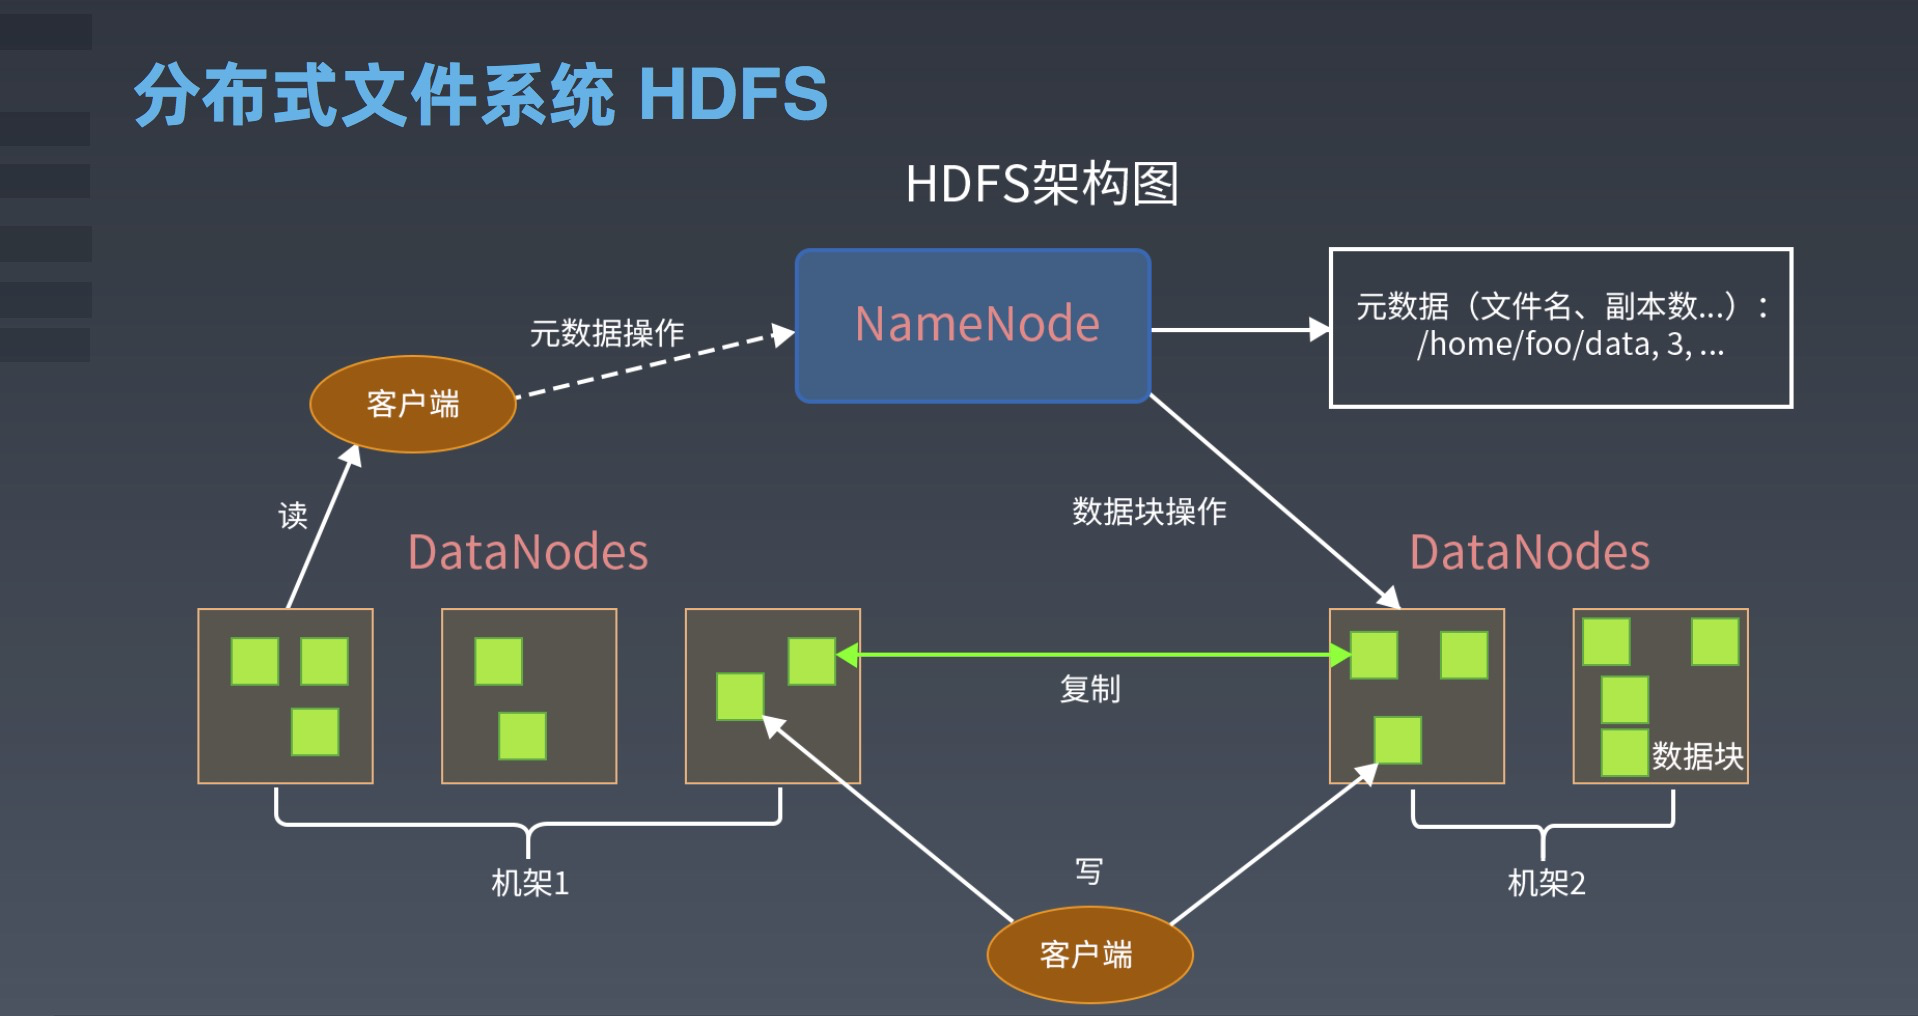 Hadoop（一）Hadoop&HDFS简单介绍 - 知乎